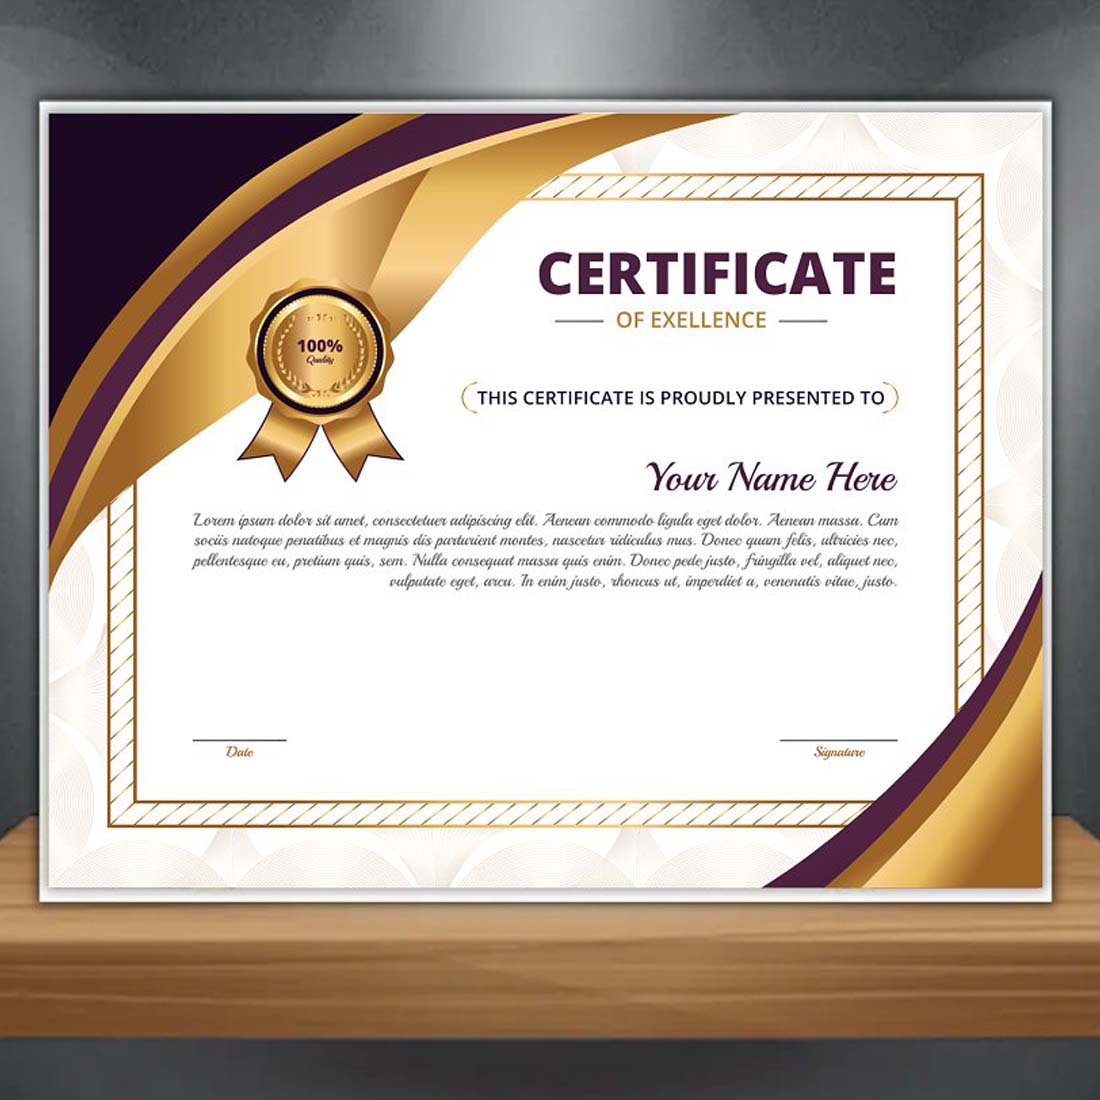 Certificate Appreciation Award preview image.